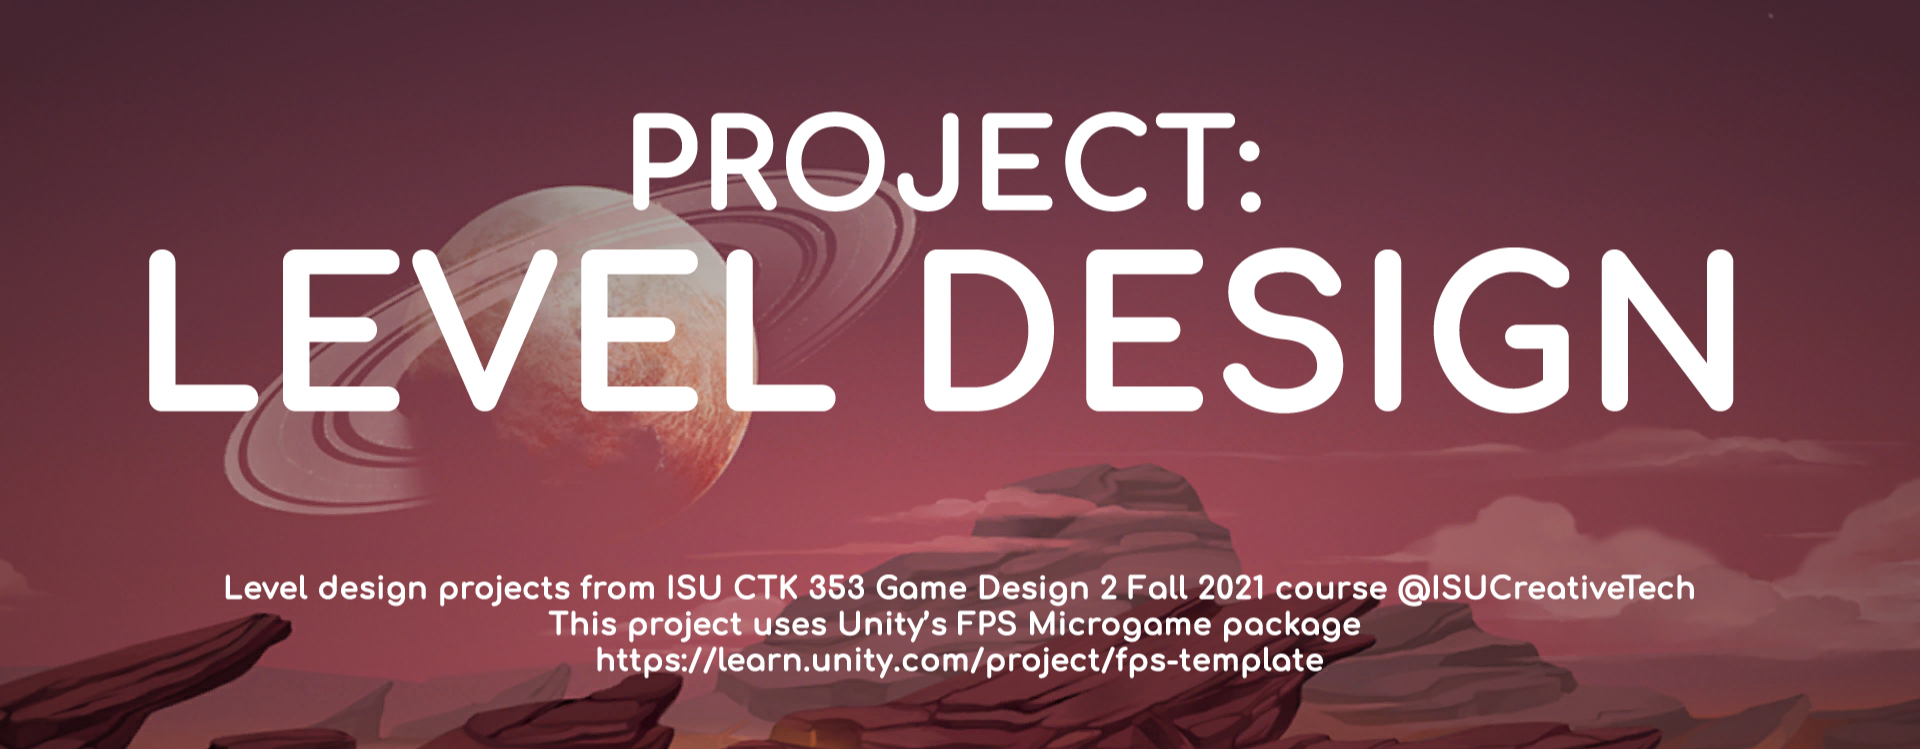 Project: Level Design